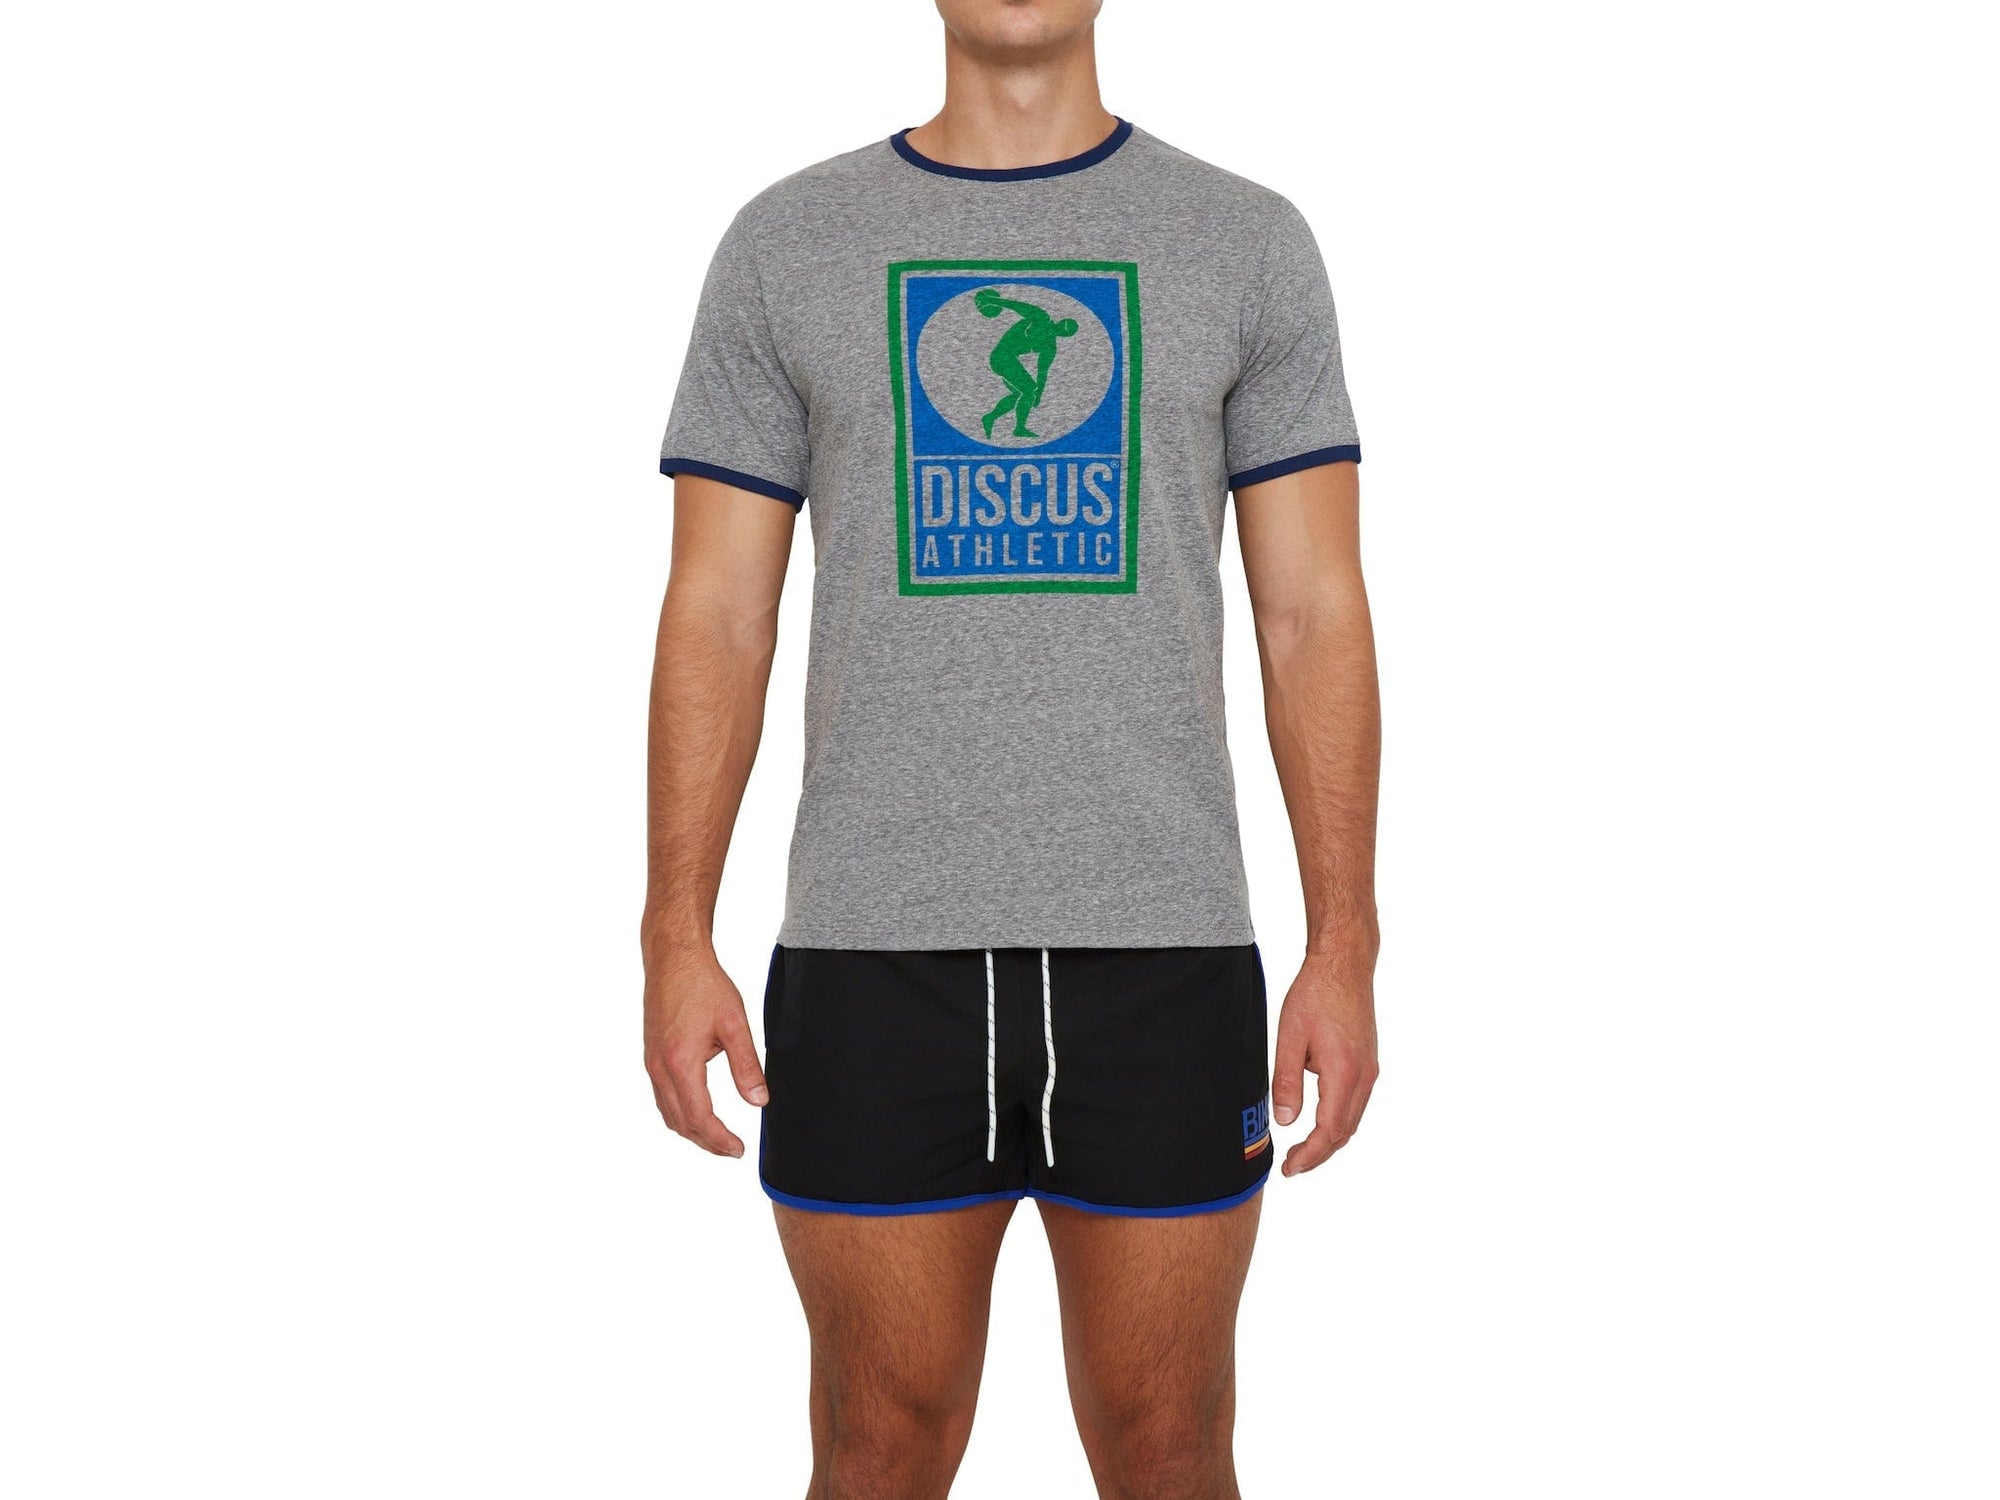 Gray Discus Athletic tshirt